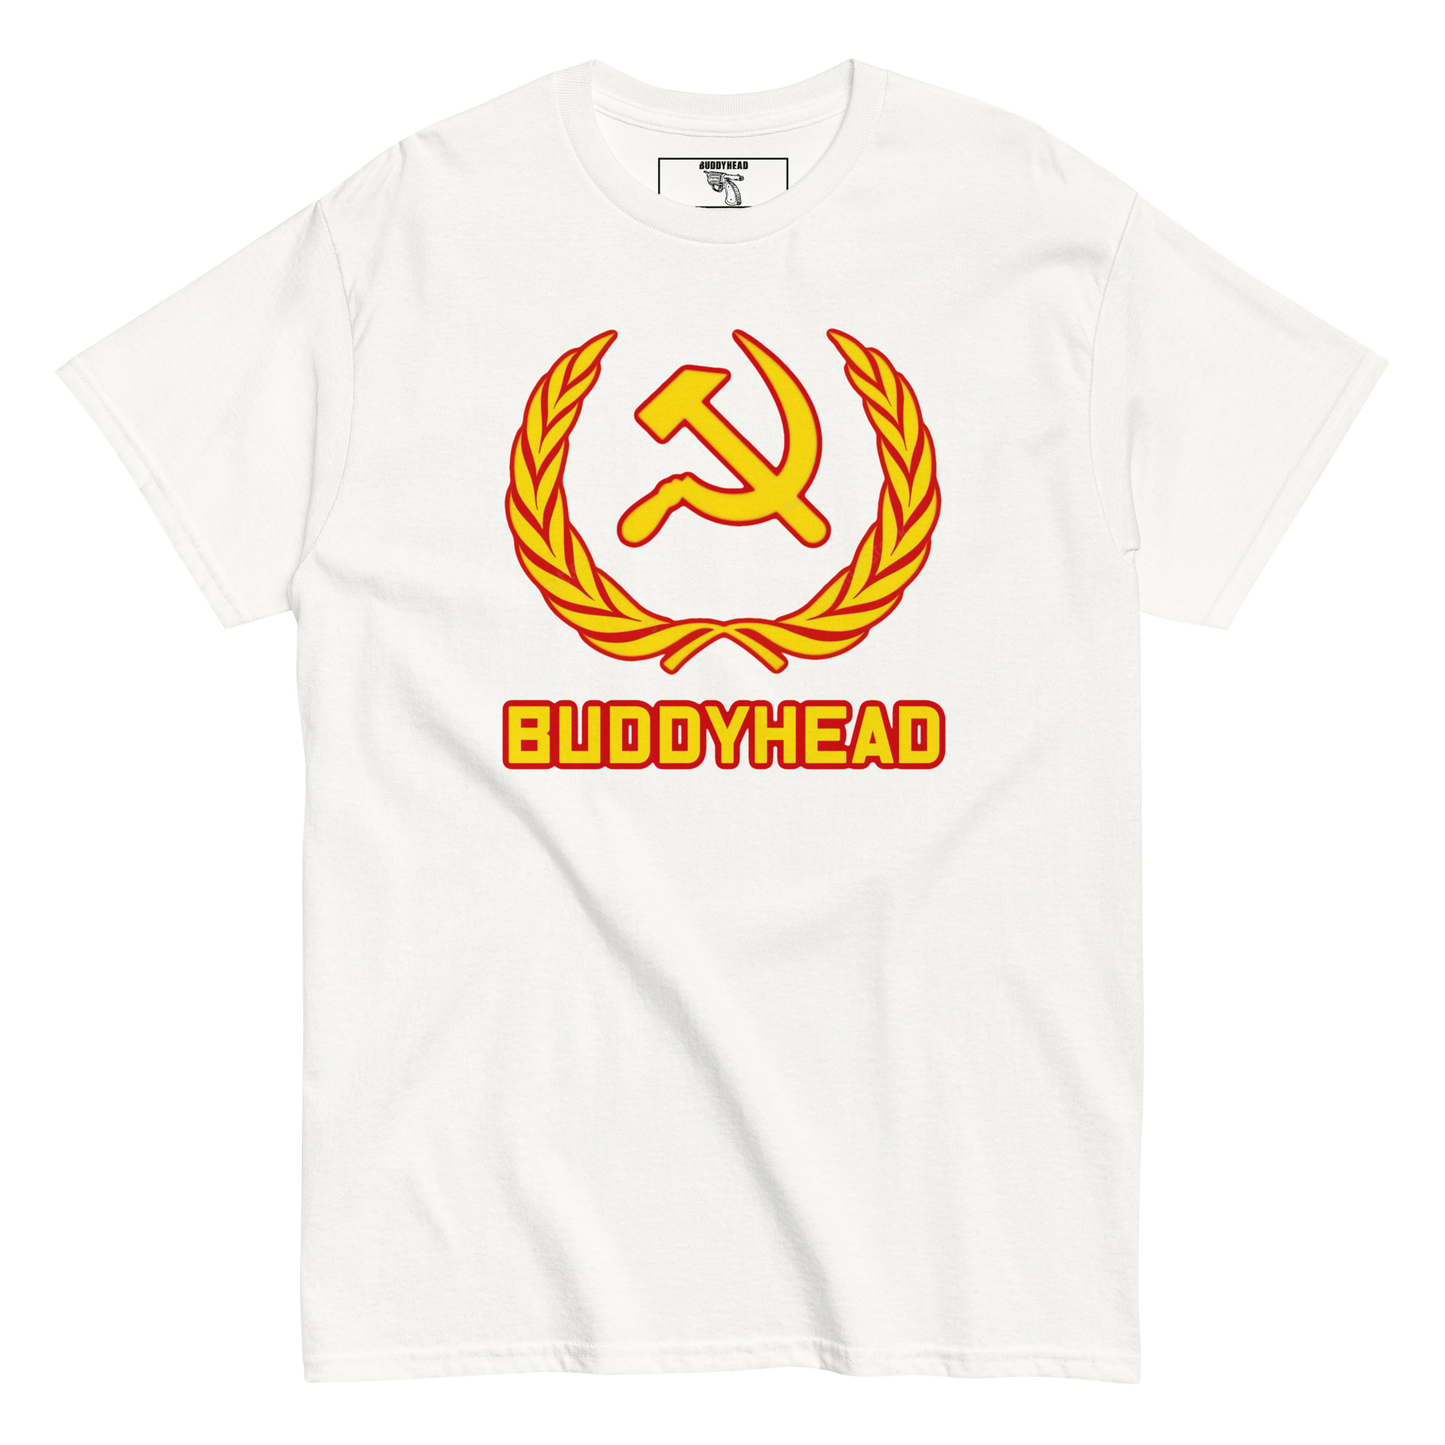 Buddyhead Commie tee